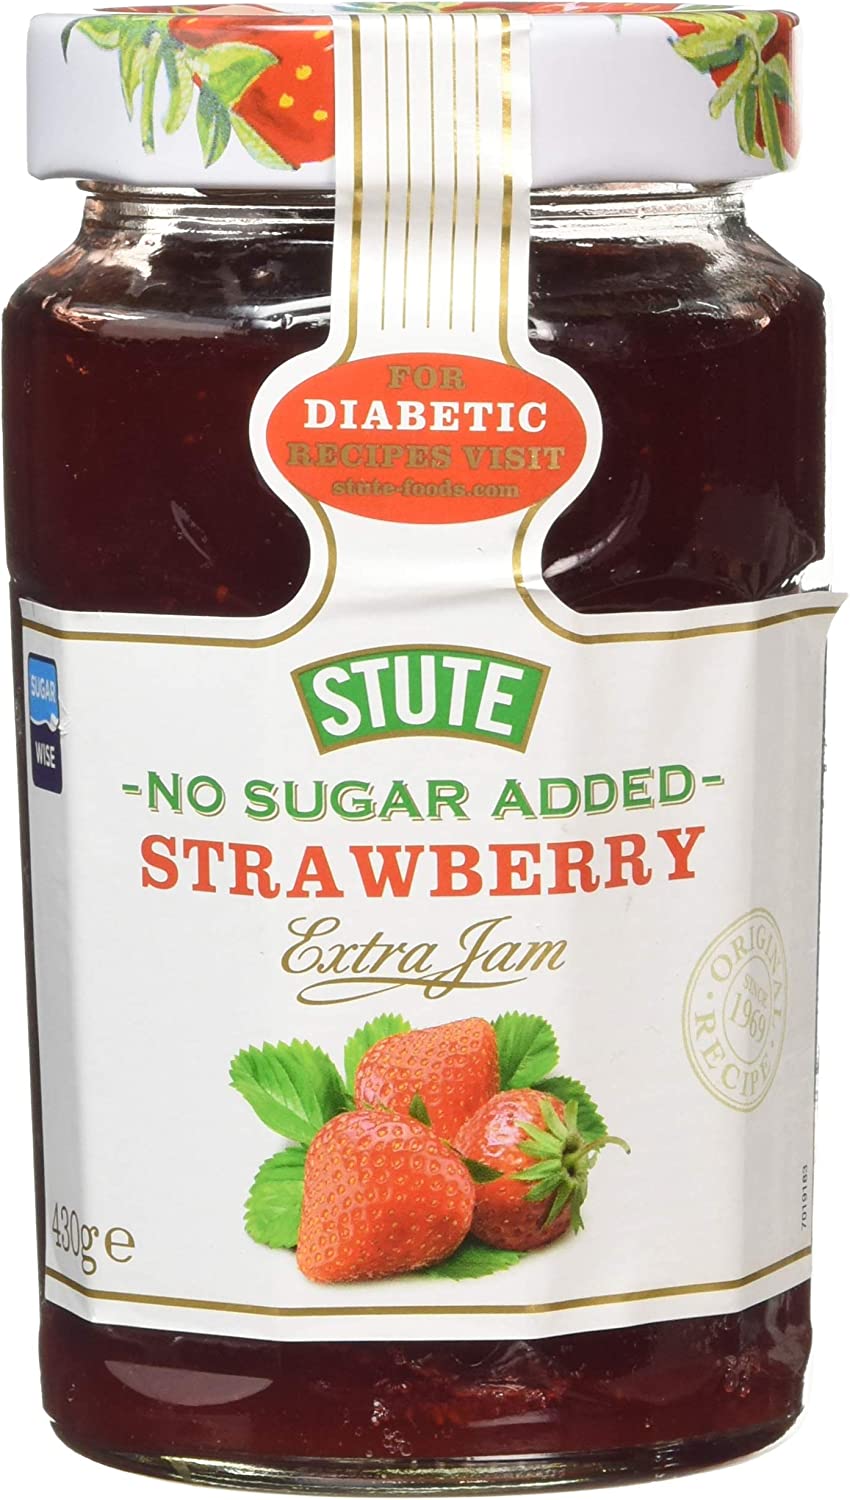 Stute Diabetic Strawberry Jam 430g